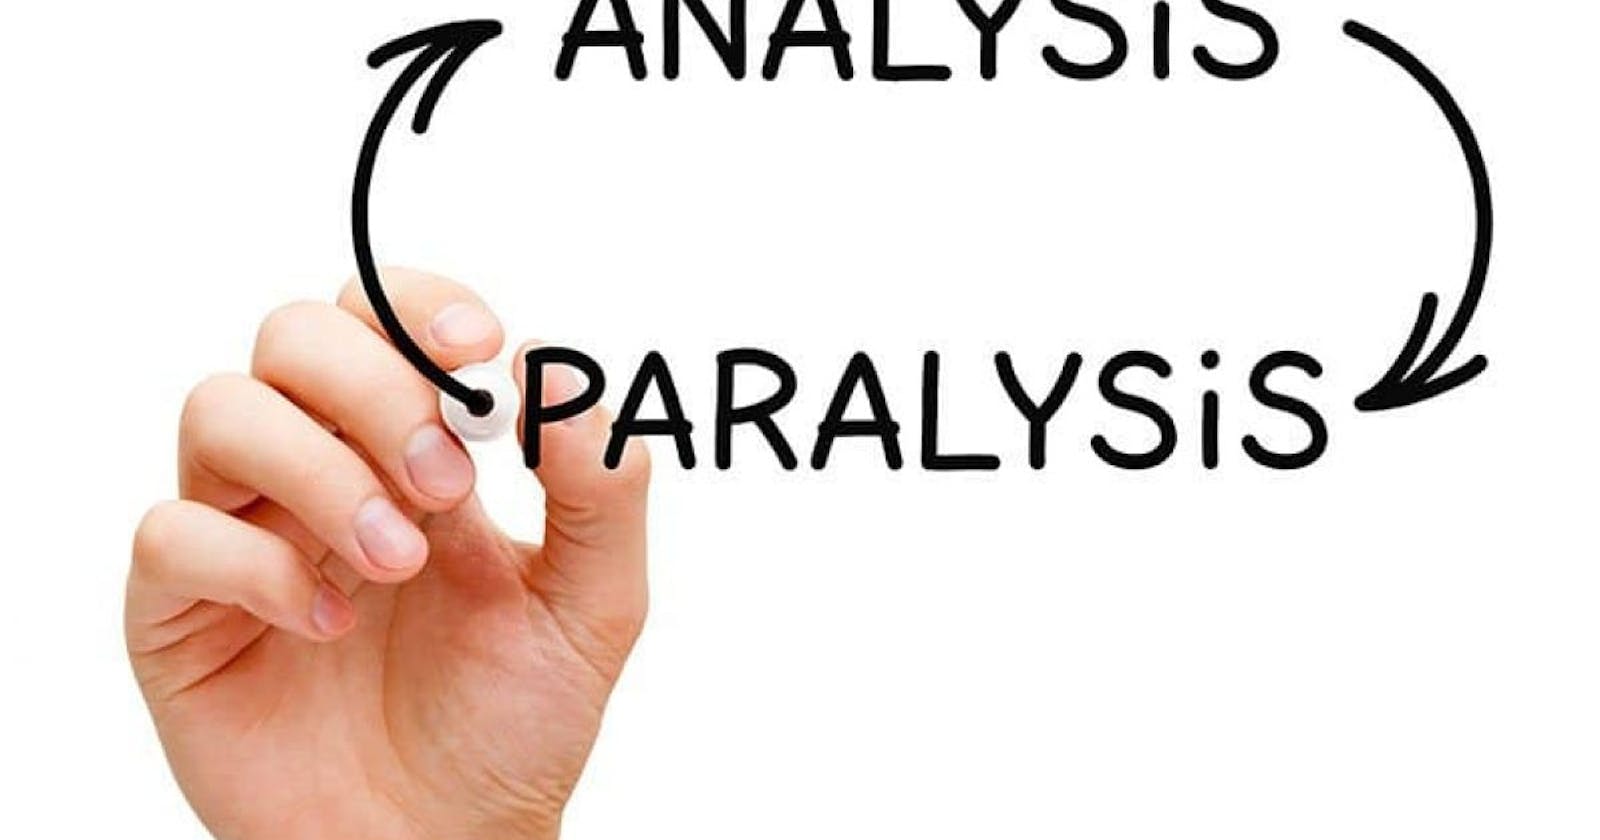 Paralysis by Analysis